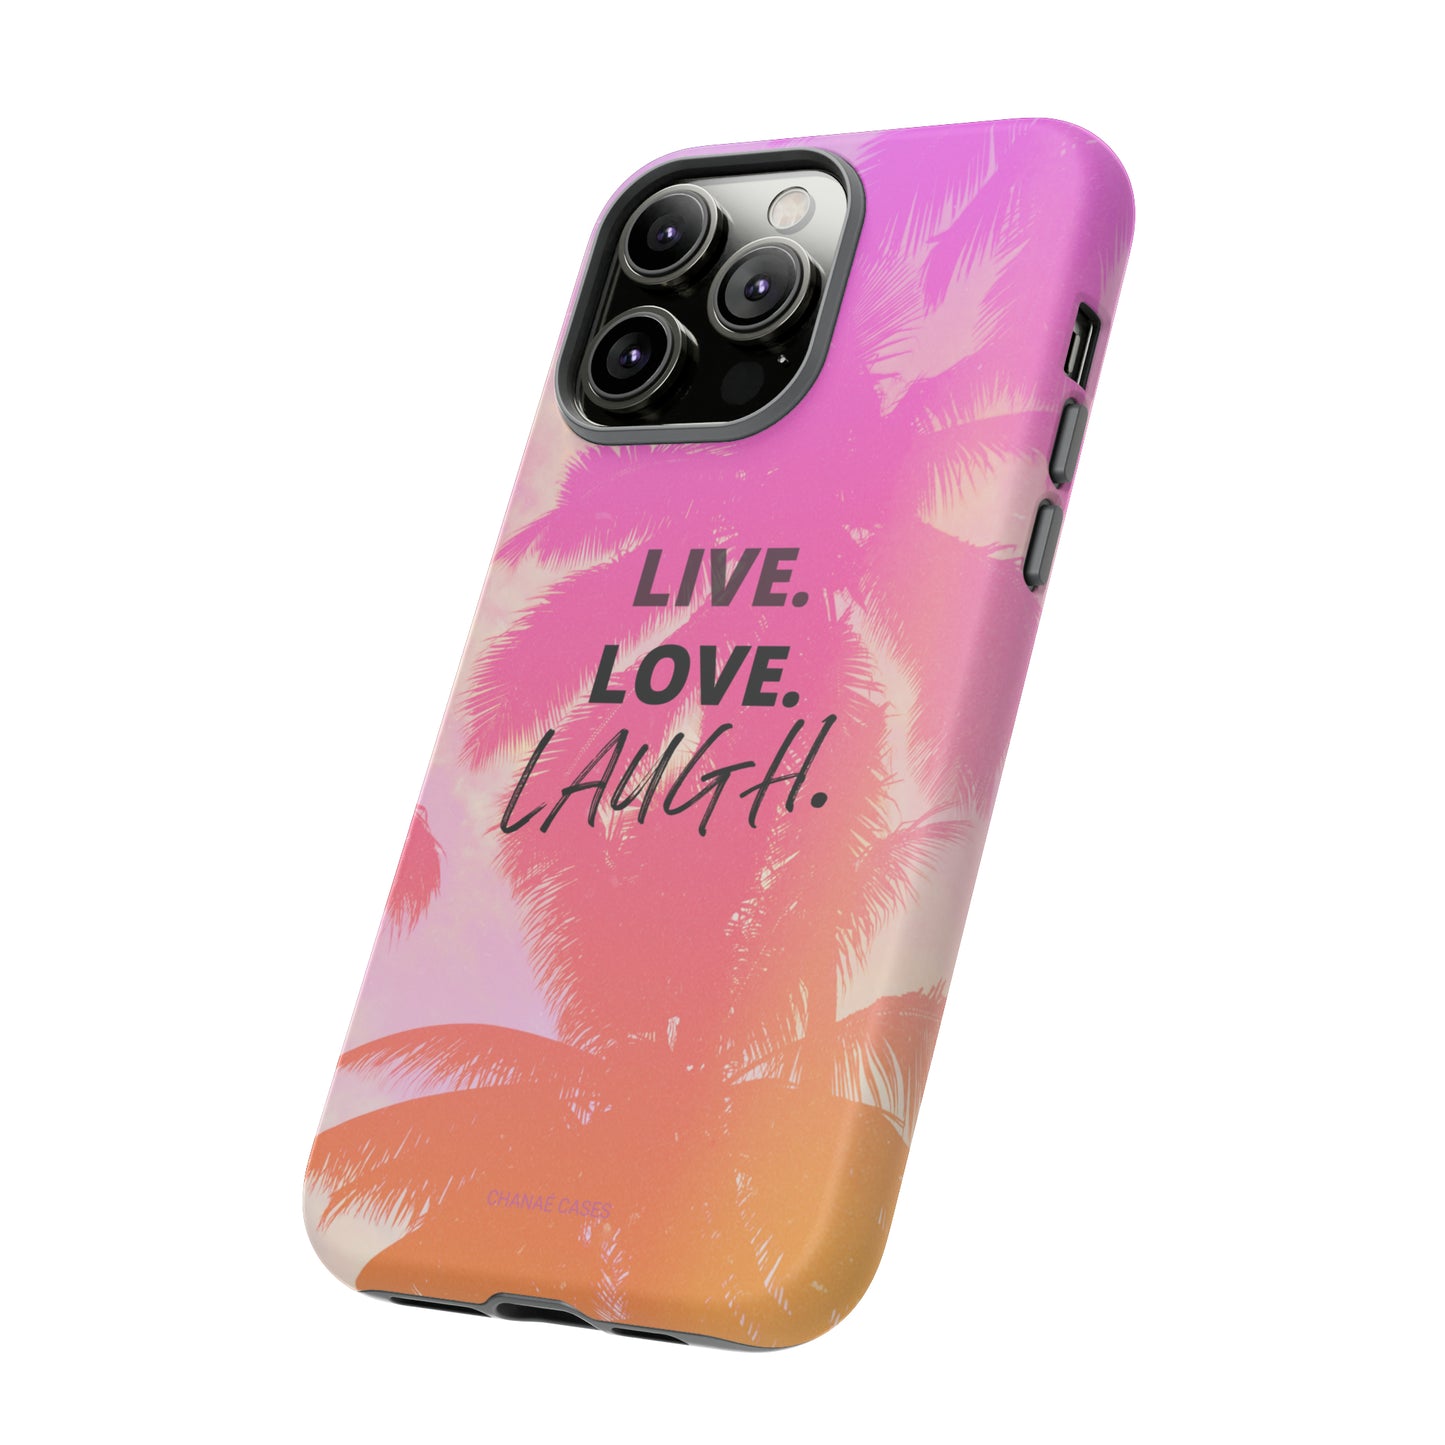 Live Life iPhone "Tough" Case (Pink)